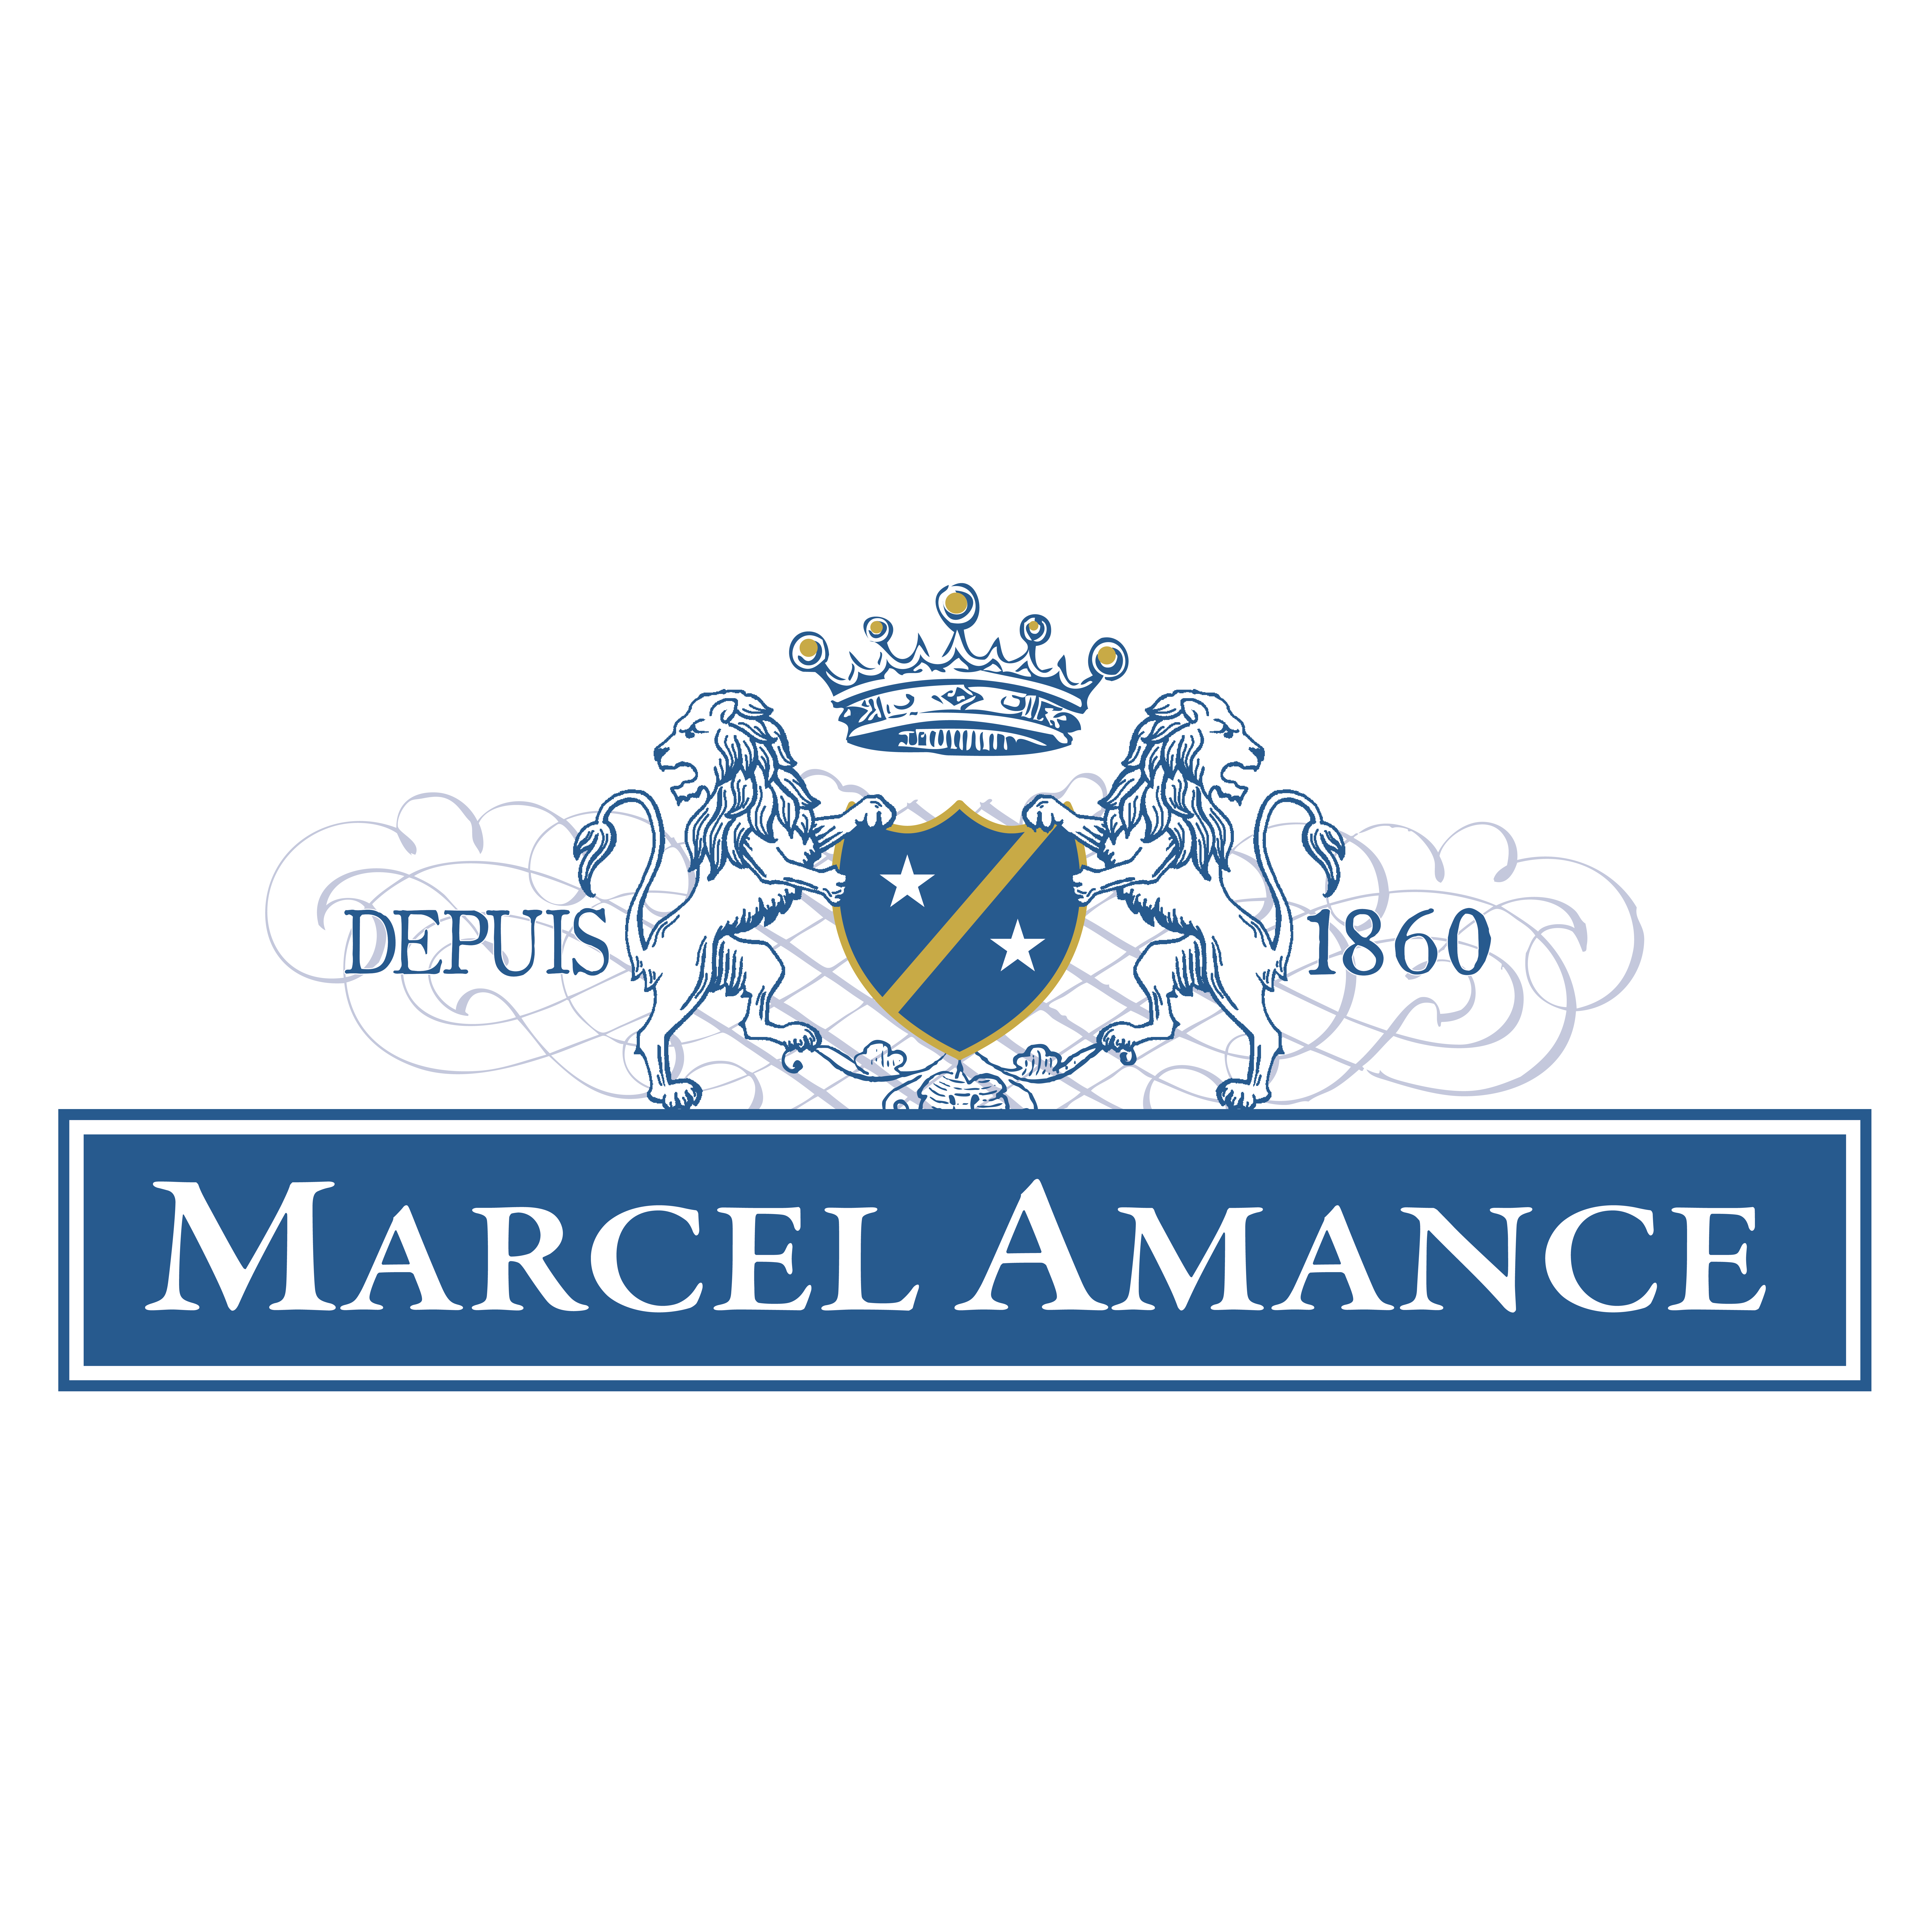 Marcel Amance